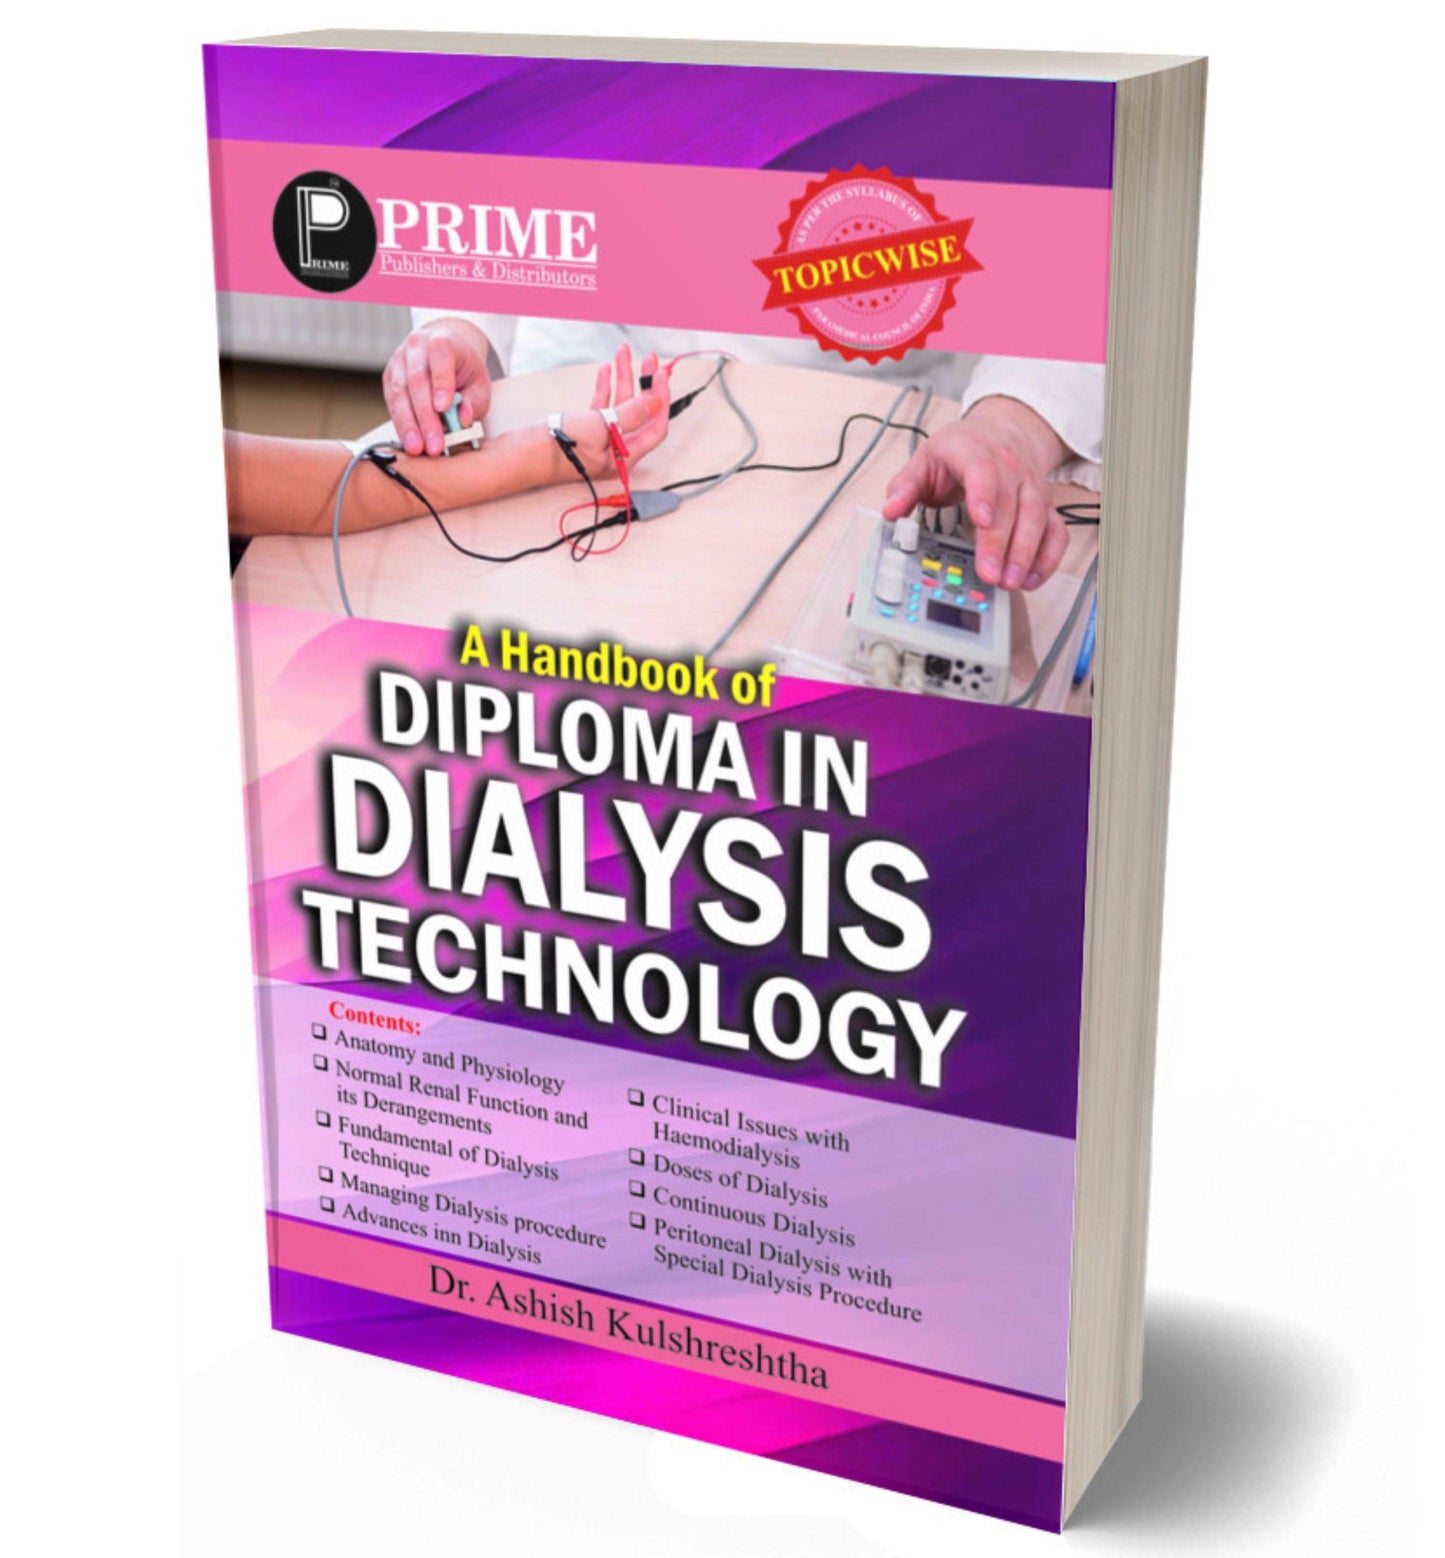 A handbook of Diploma in Dialysis Technology